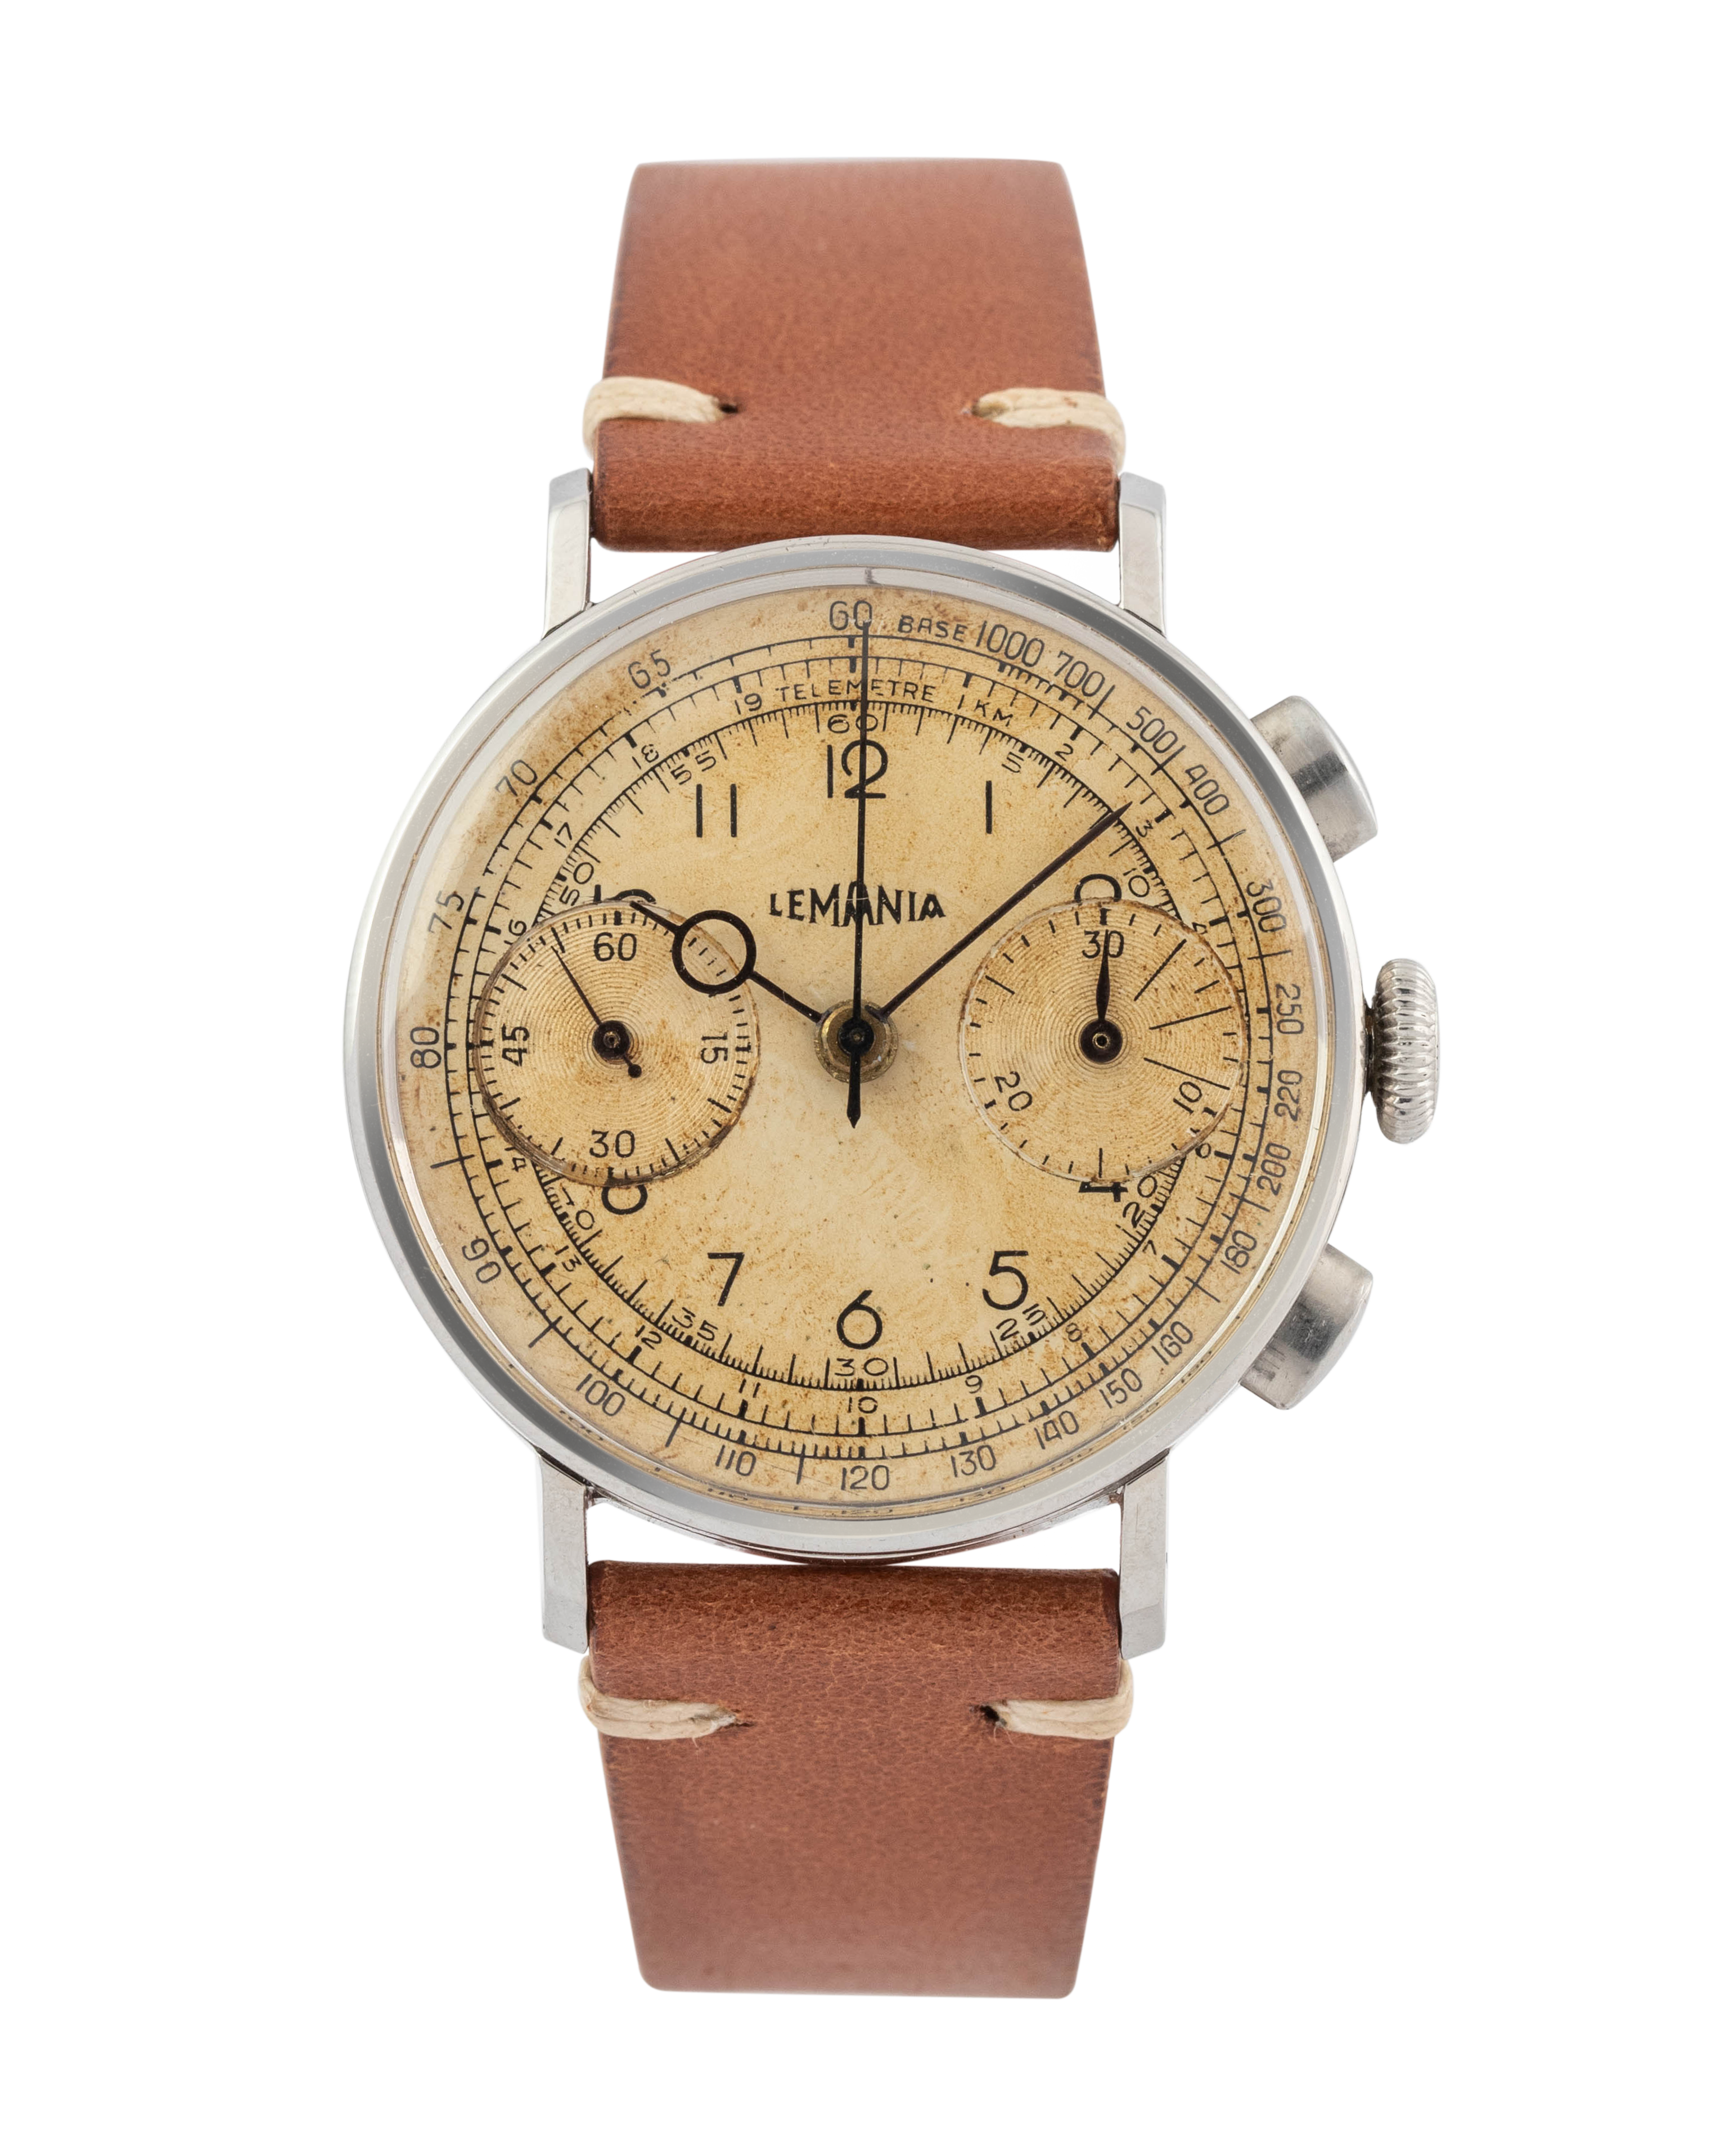 Lemania Chronograph wrist watch